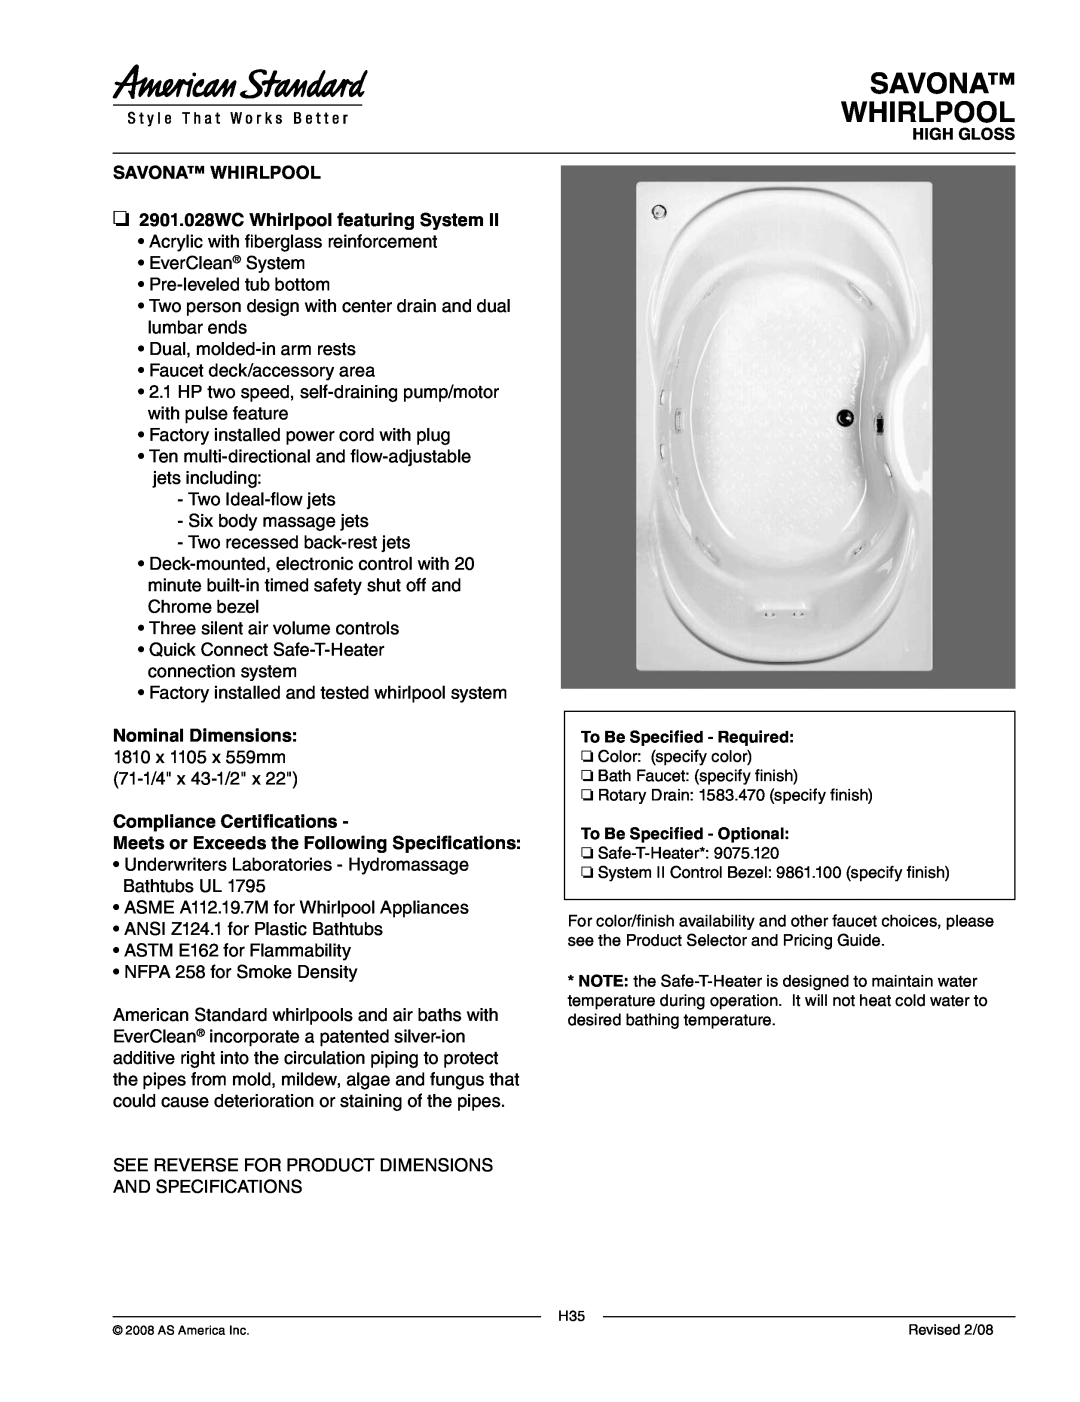 American Standard 9861.100 dimensions Savona Whirlpool, SAVONA WHIRLPOOL 2901.028WC Whirlpool featuring System 